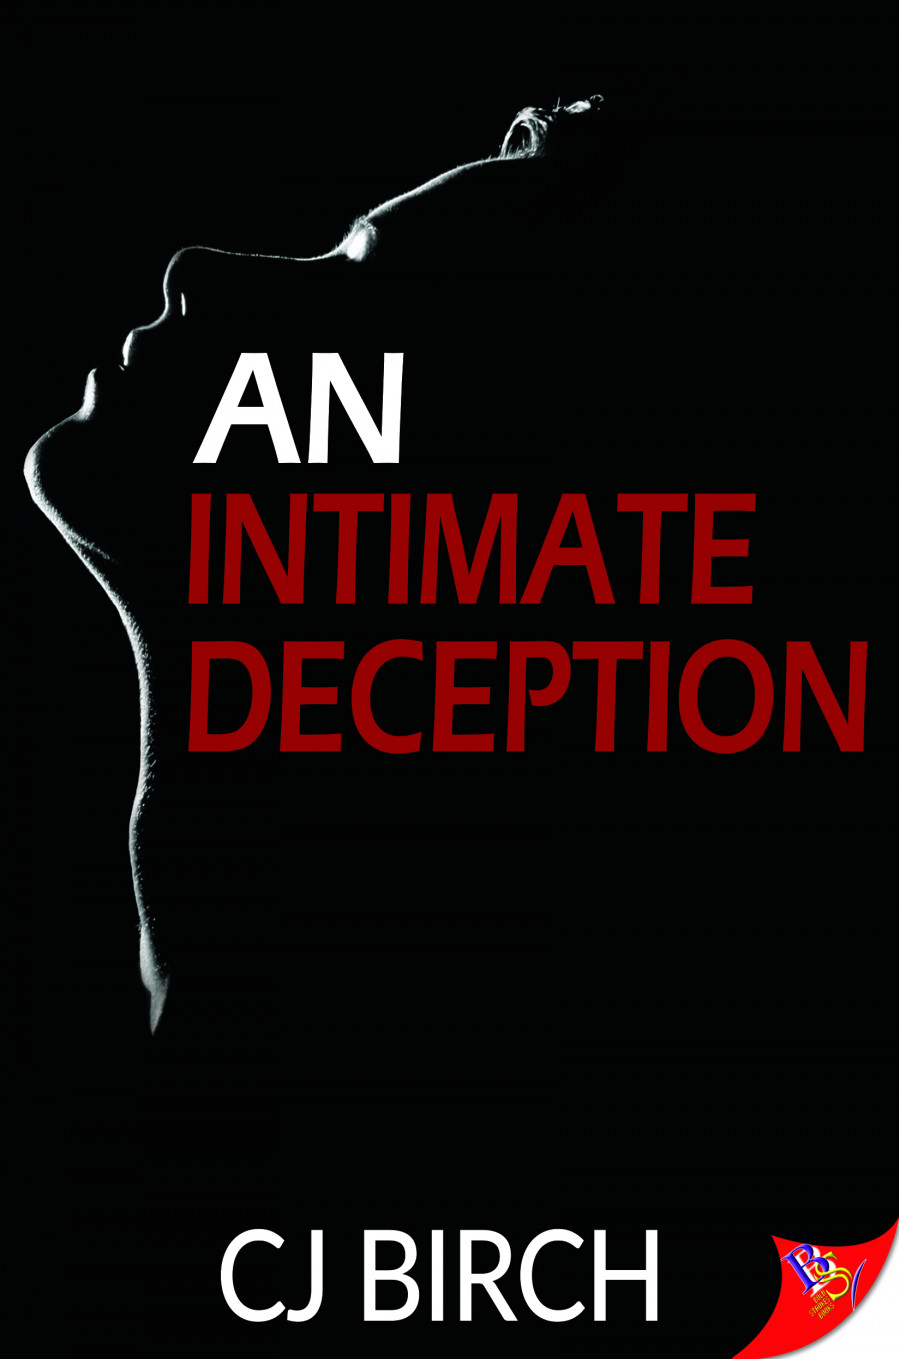 An Intimate Deception